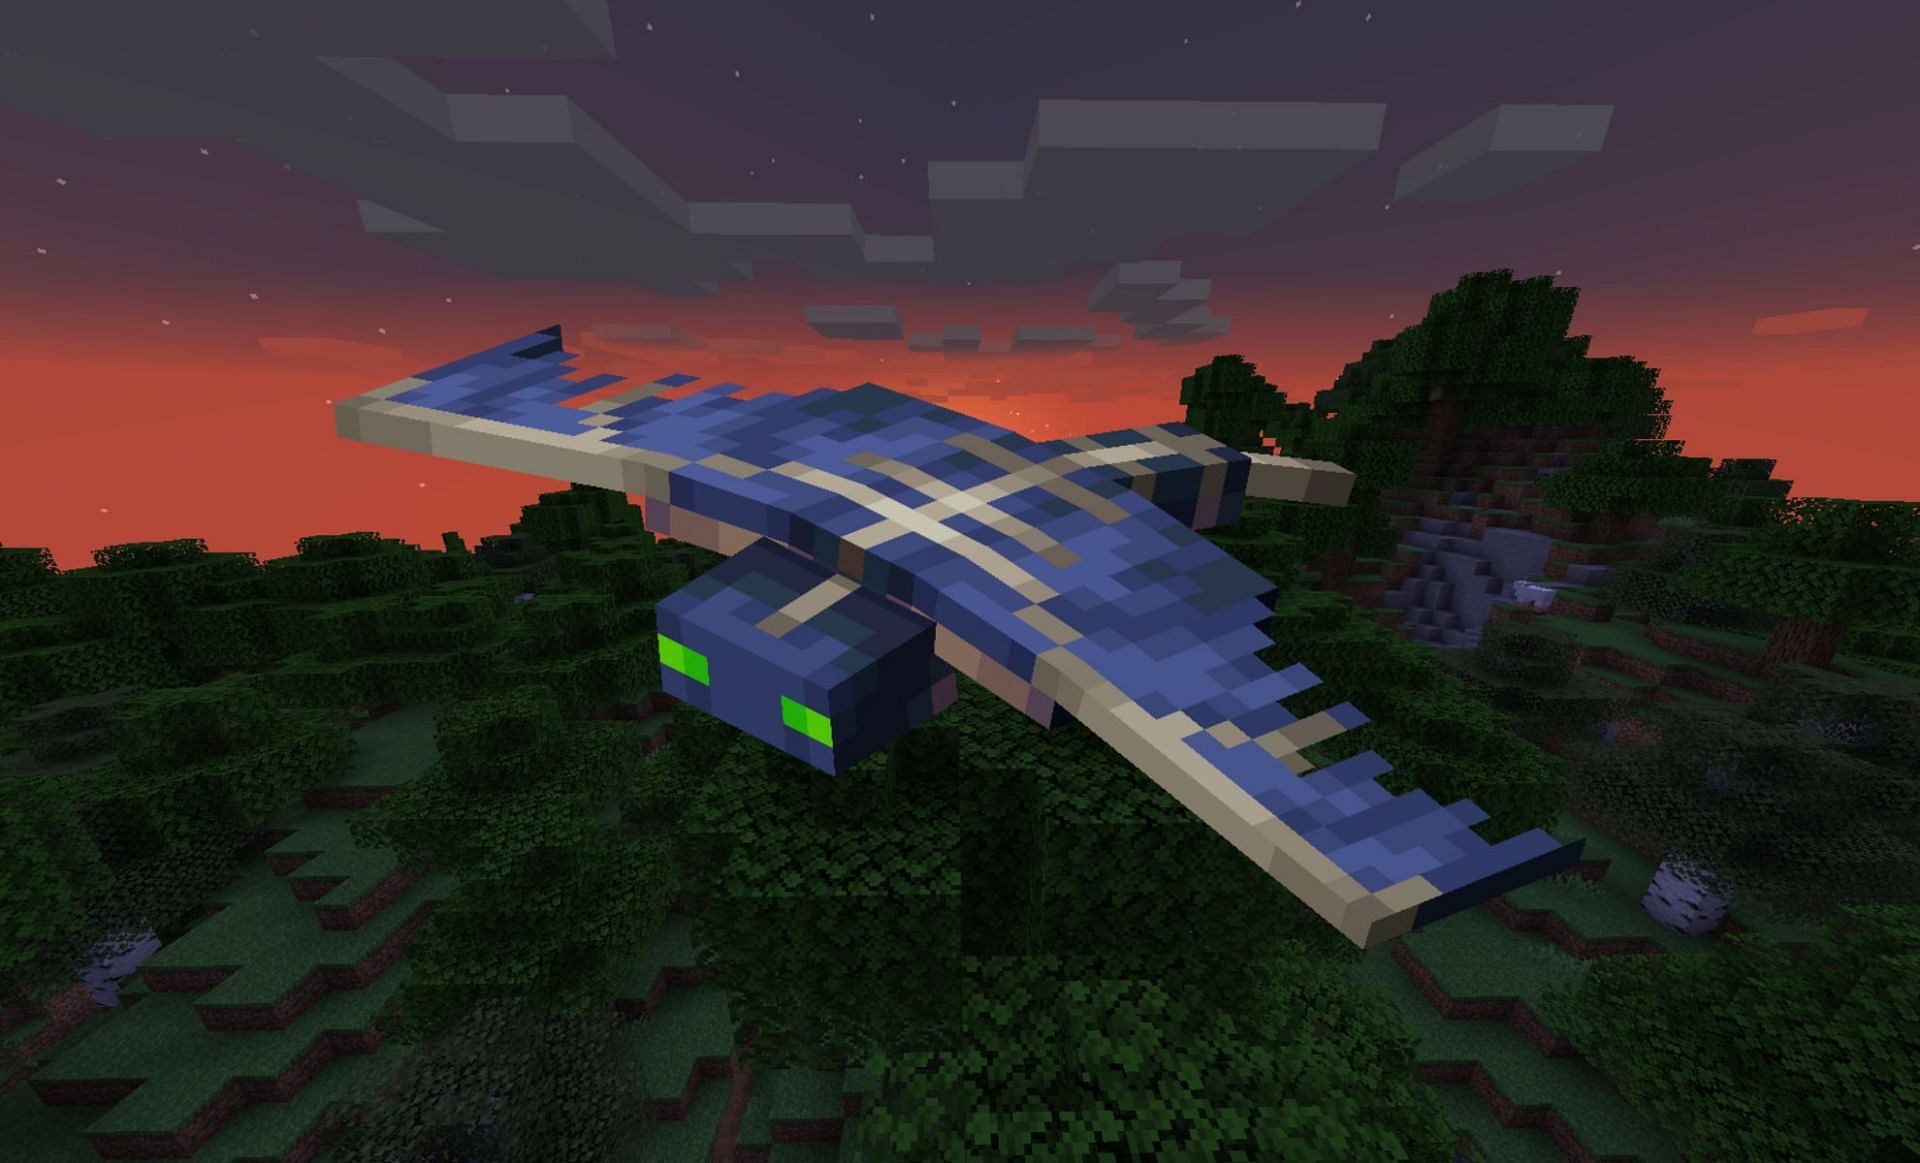 Phantoms arrive at night (Images via Minecraft Wiki)